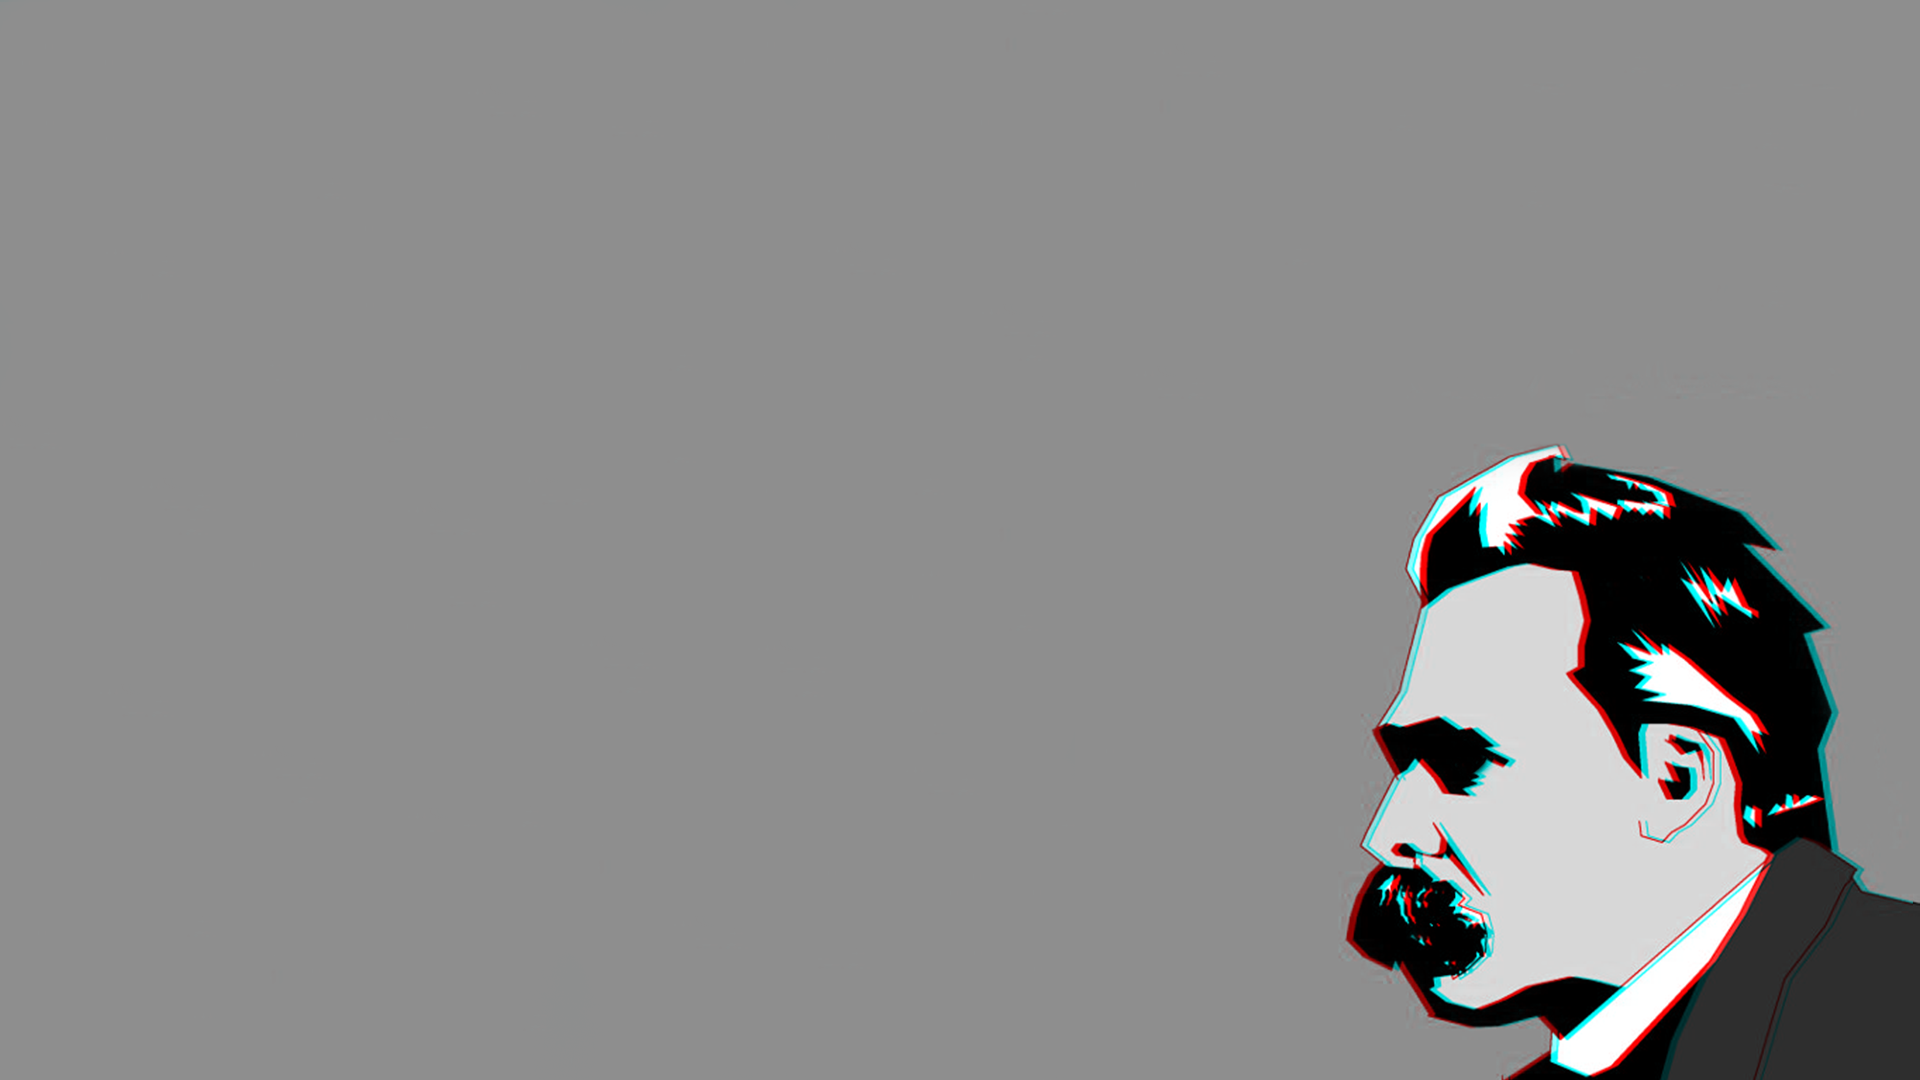 Friedrich Nietzsche Chromatic Aberration Simple Background 1920x1080